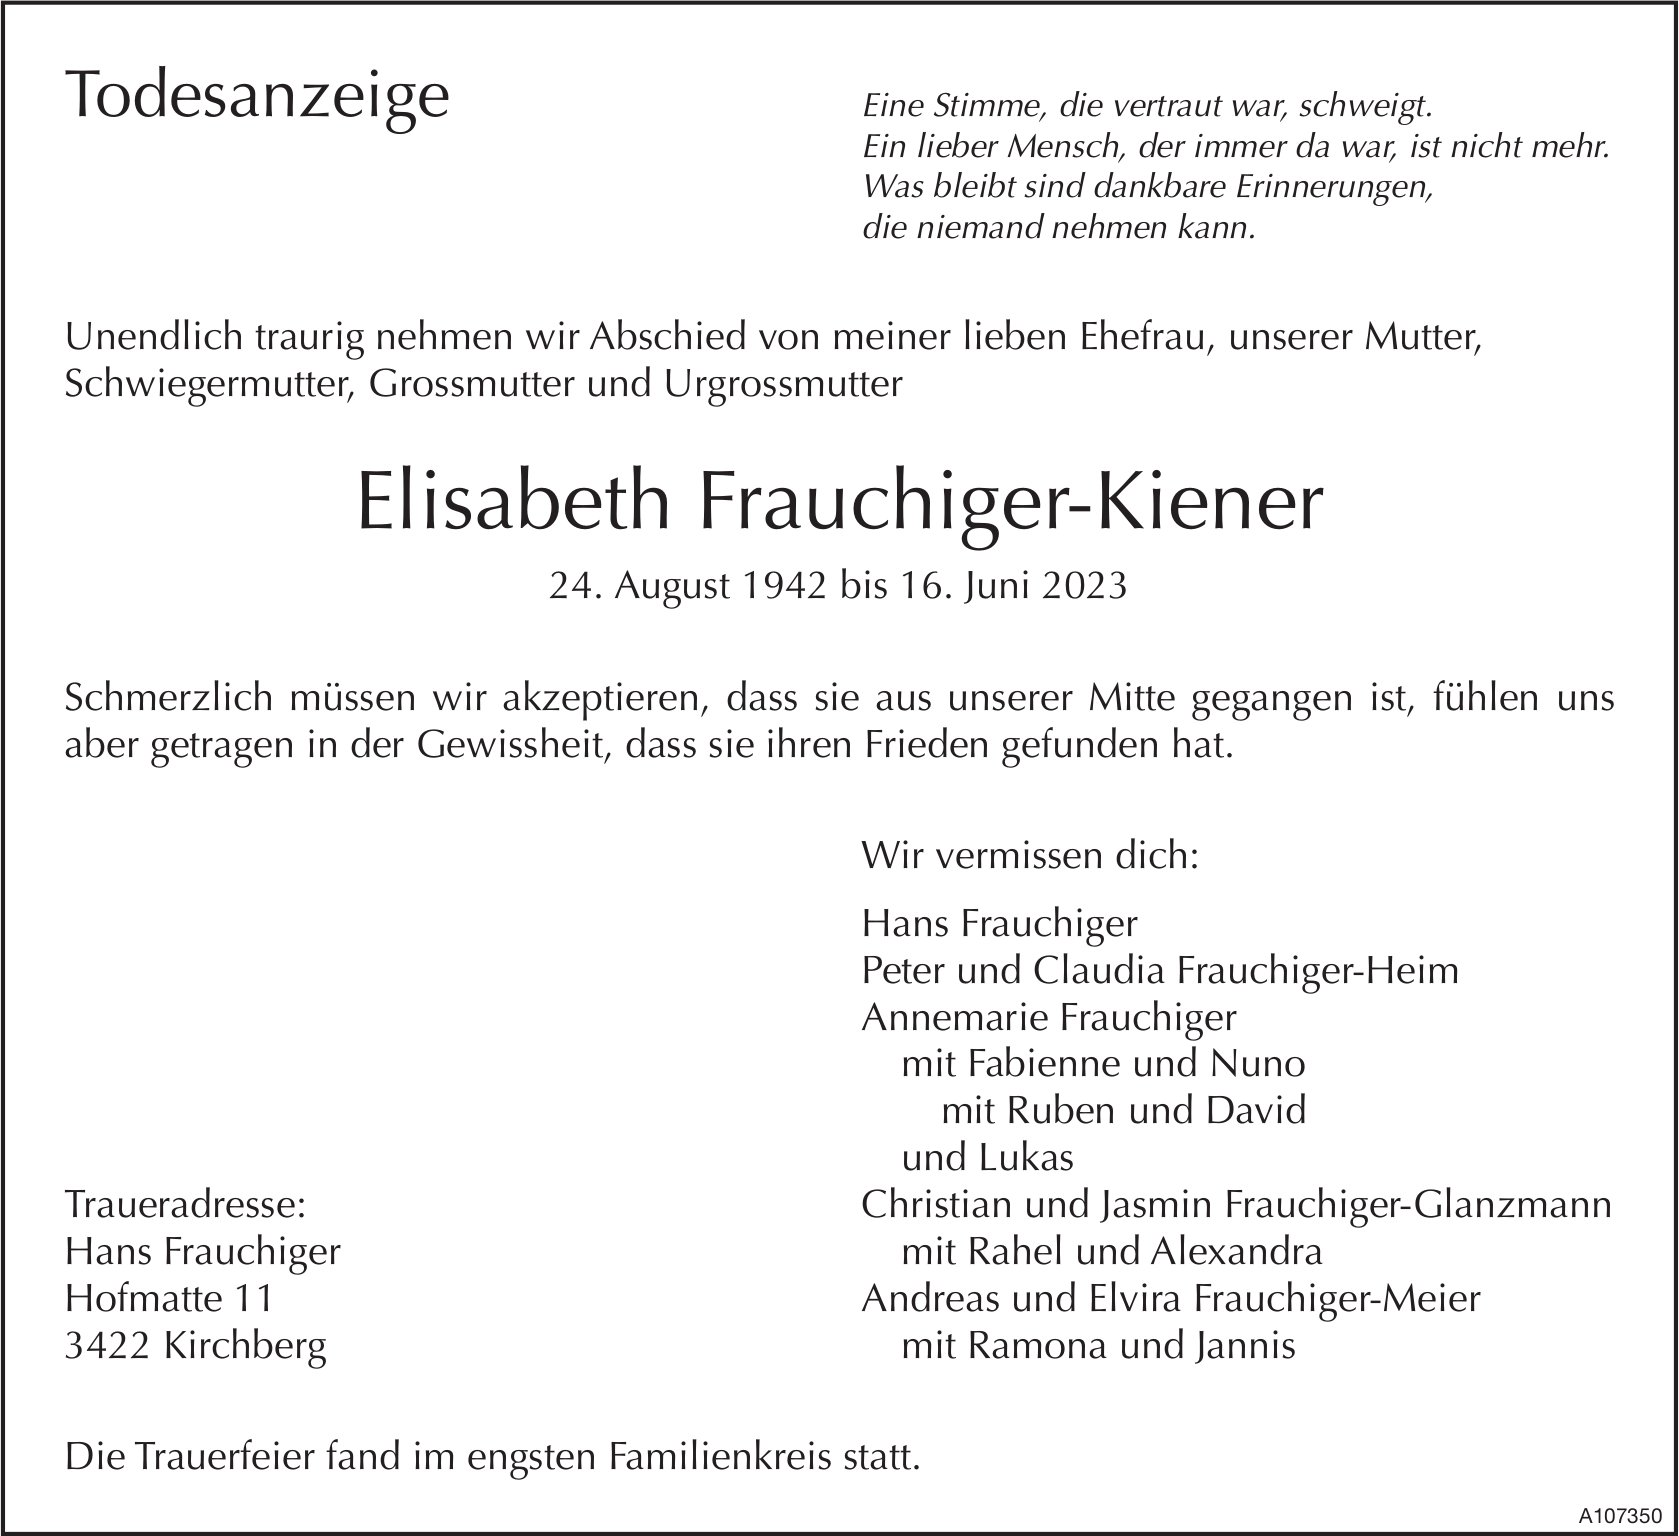 Elisabeth Frauchiger-Kiener, Juni 2023 / TA